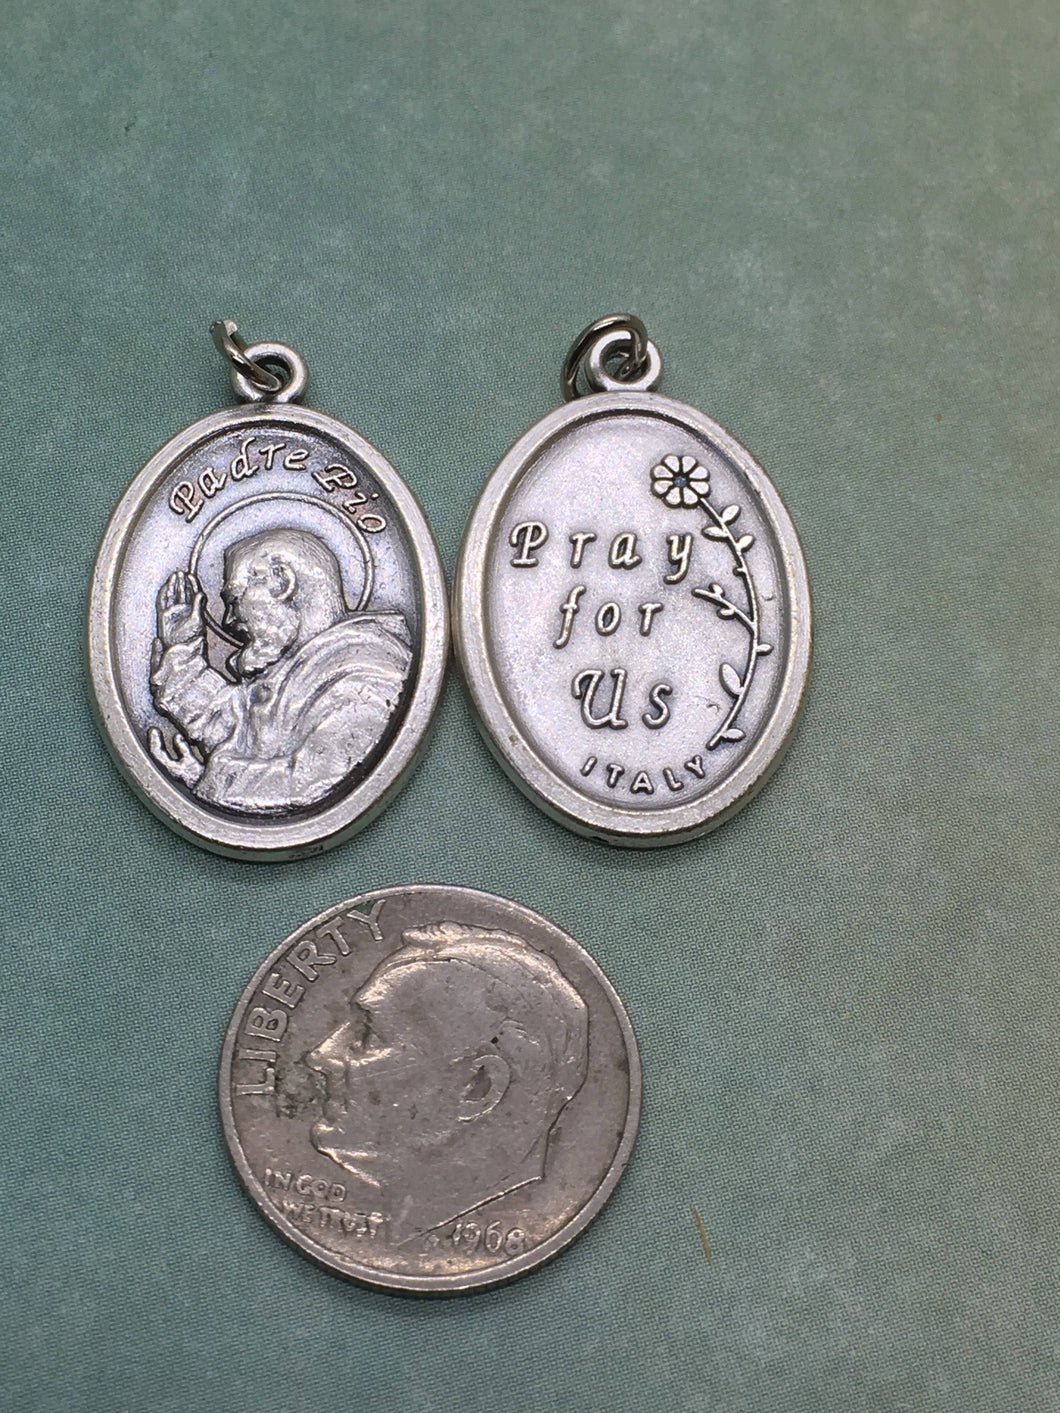 St. Padre Pio of Pietrelcina aka Francesco Forgione holy medal - 4 styles - Italian Catholic saint - stigmata, confessor, Capuchin